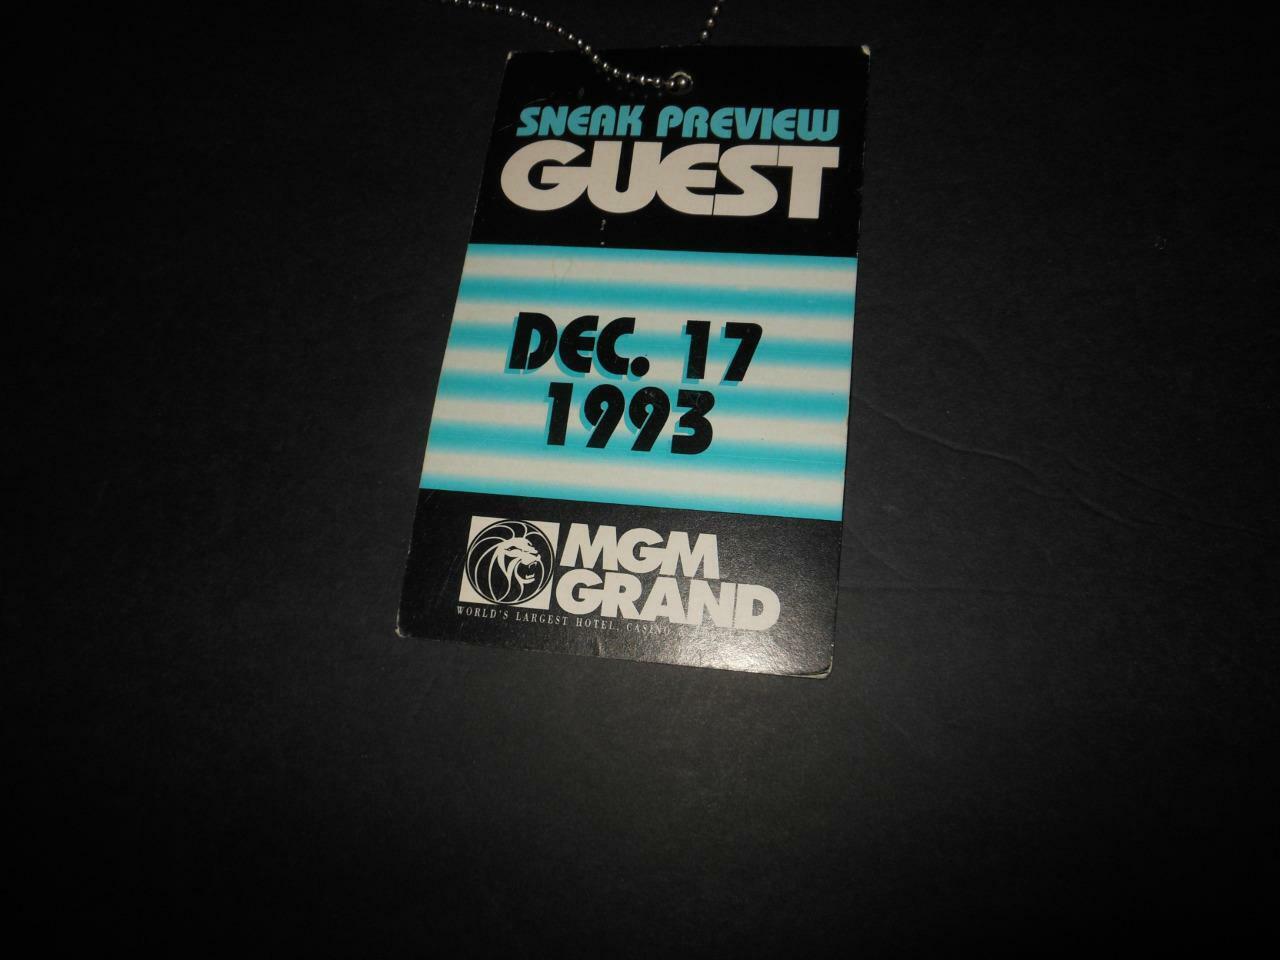 RARE MGM HOTEL CASINO LAS VEGAS GRAND OPENING VIP GUEST PASS BADGE PASS 12/17/93